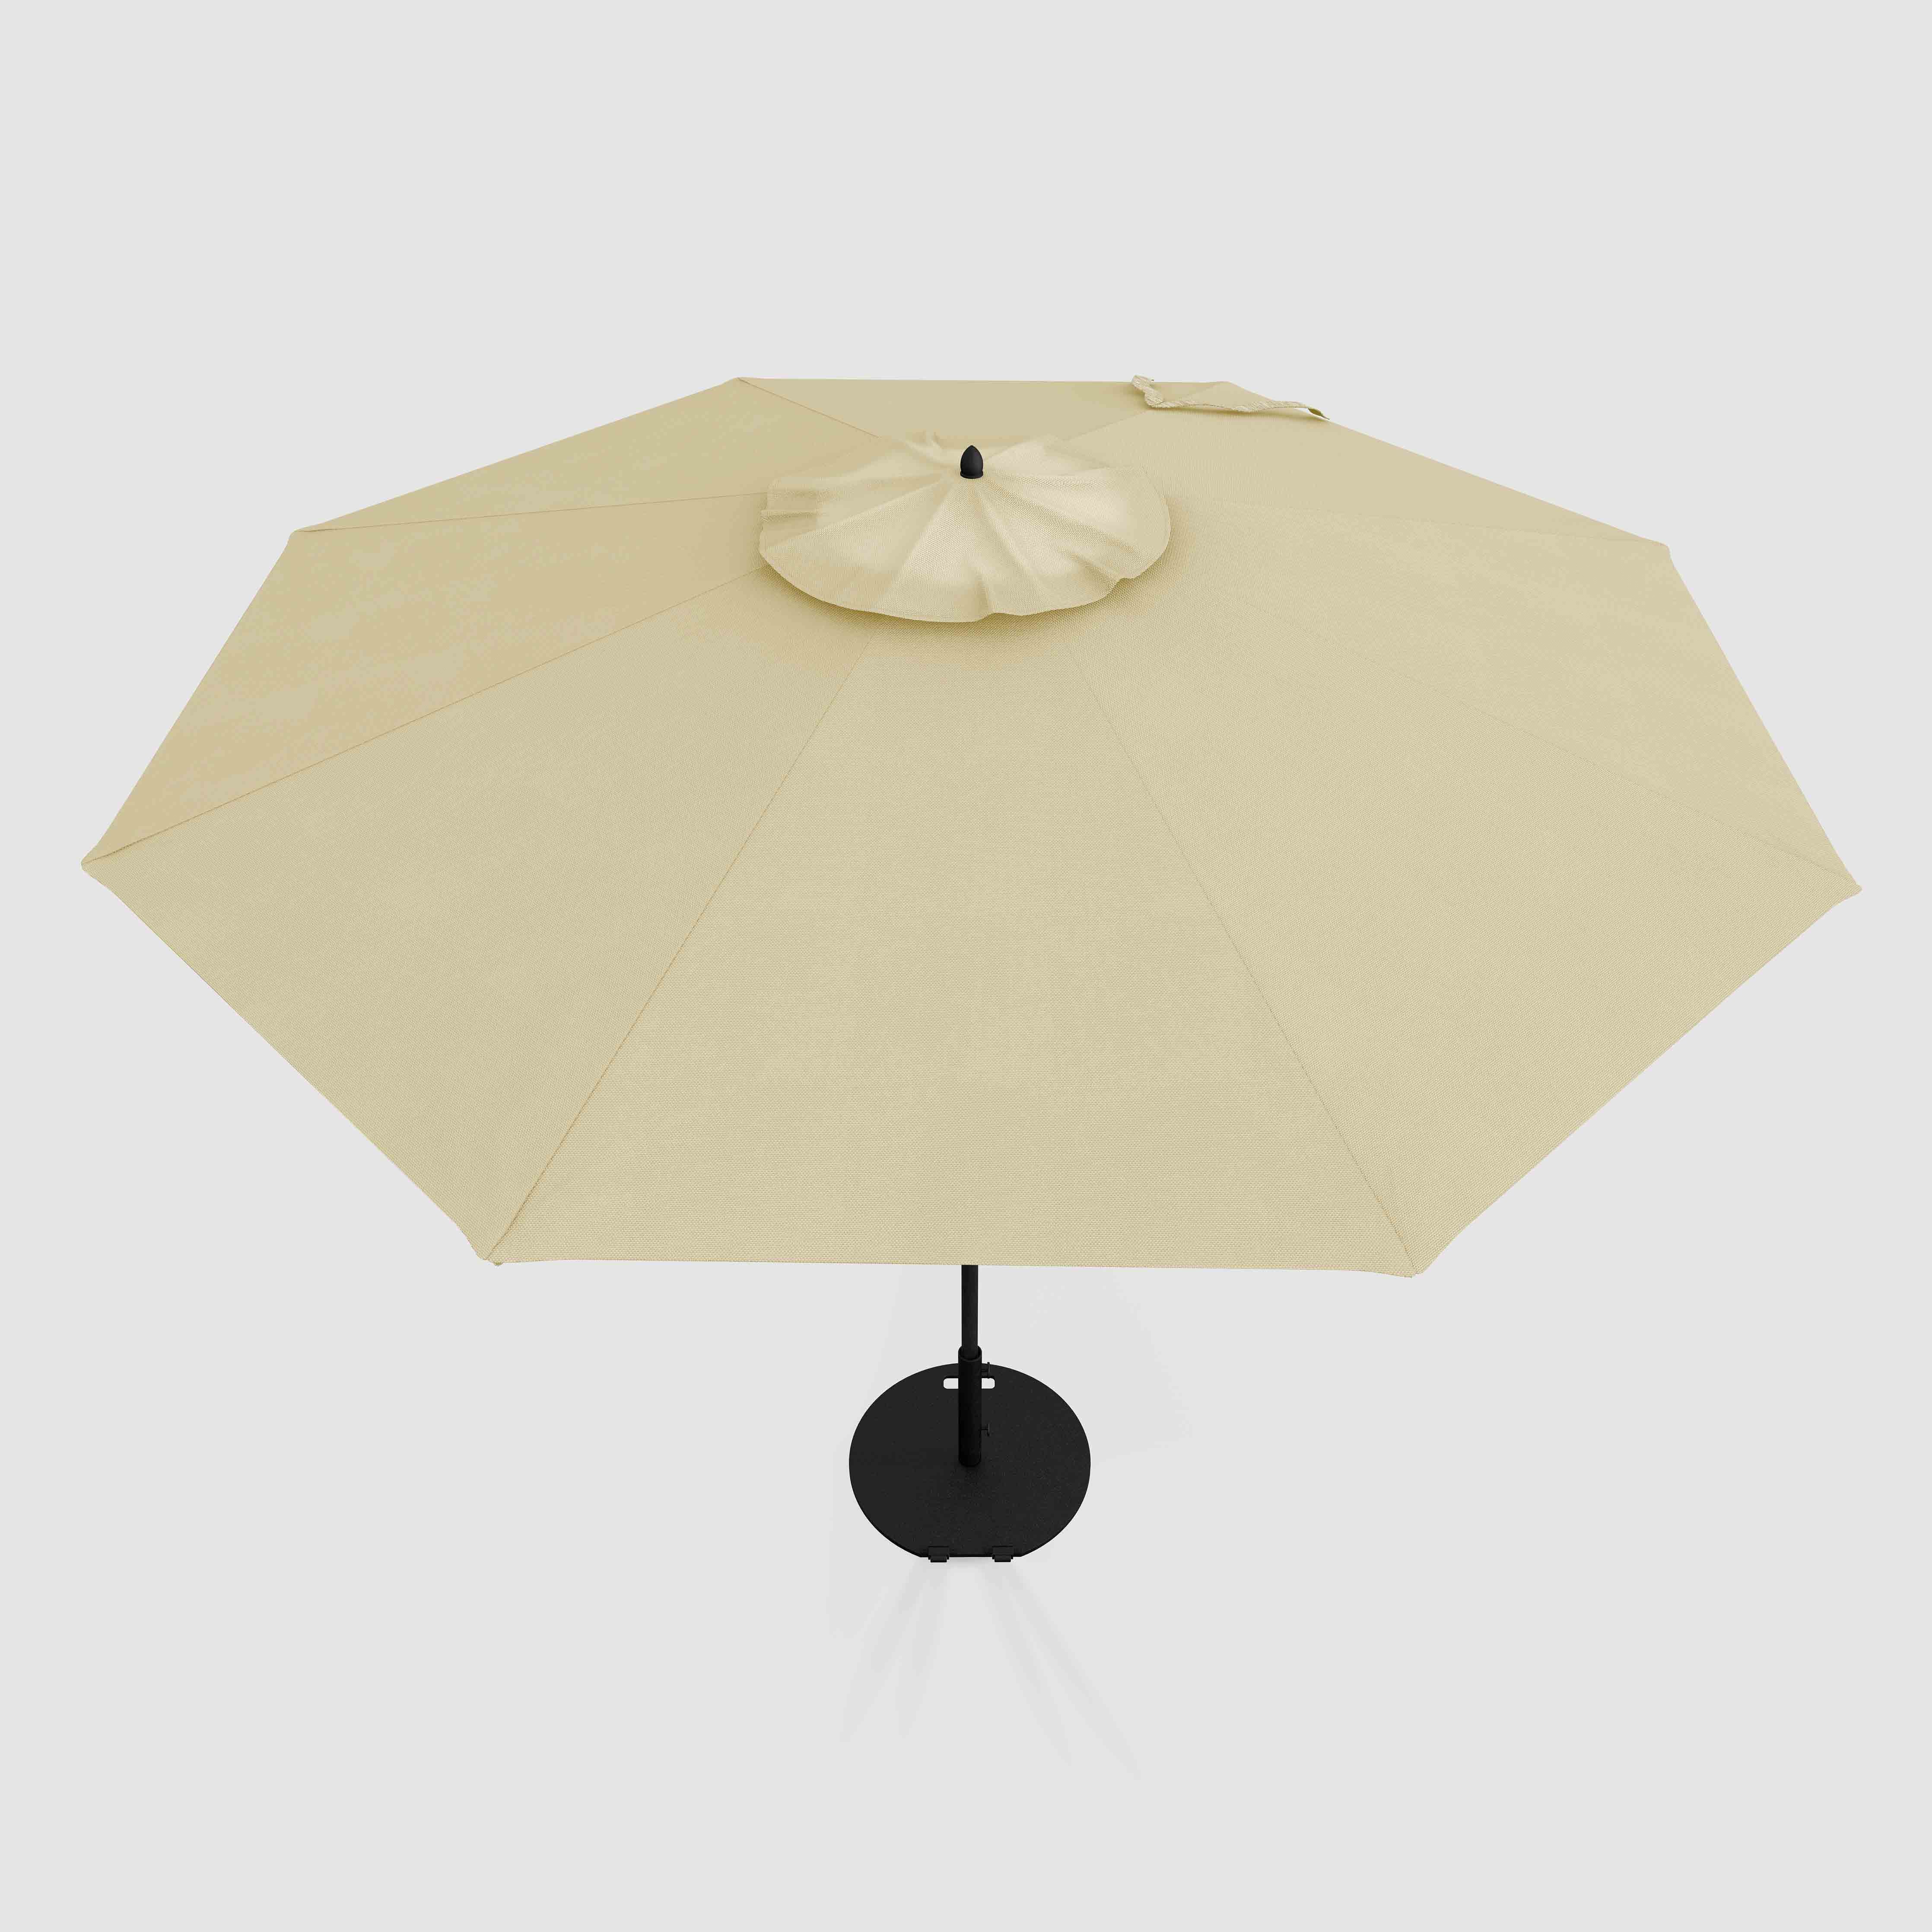 Terylast Patio Umbrellas Collection: Durable.